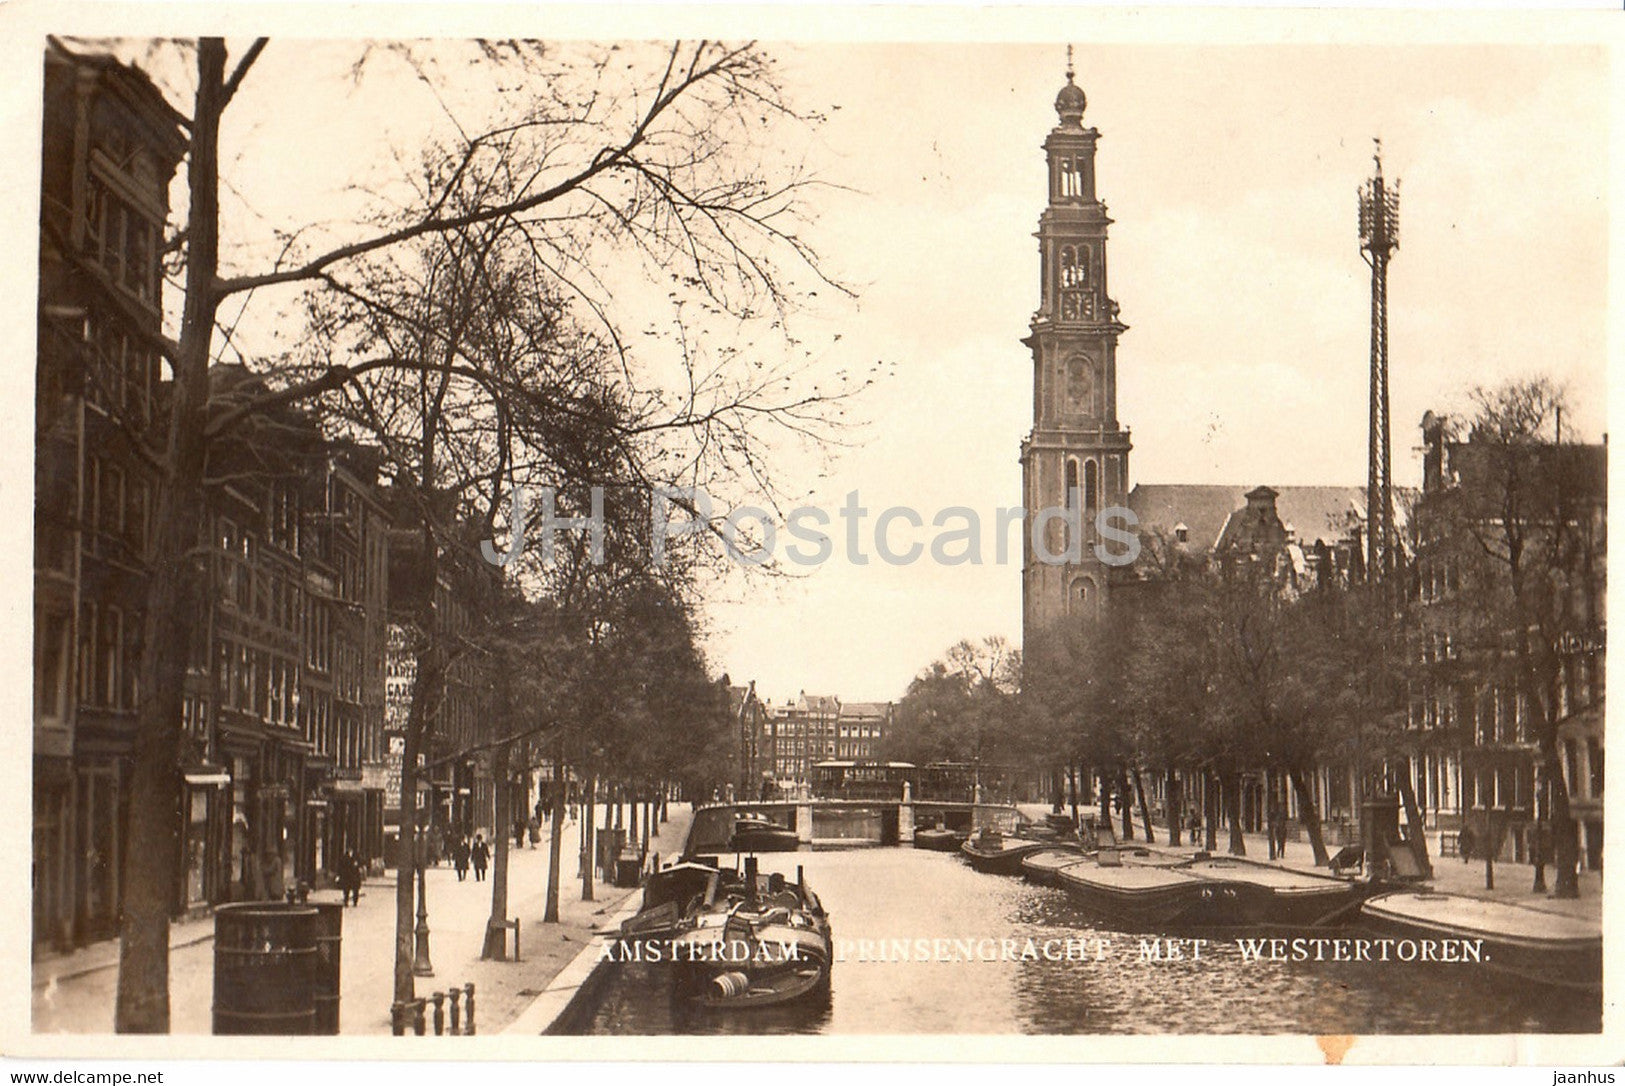 Amsterdam - Prinsengracht met Westertoren - old postcard - 1931 - Netherlands - used - JH Postcards